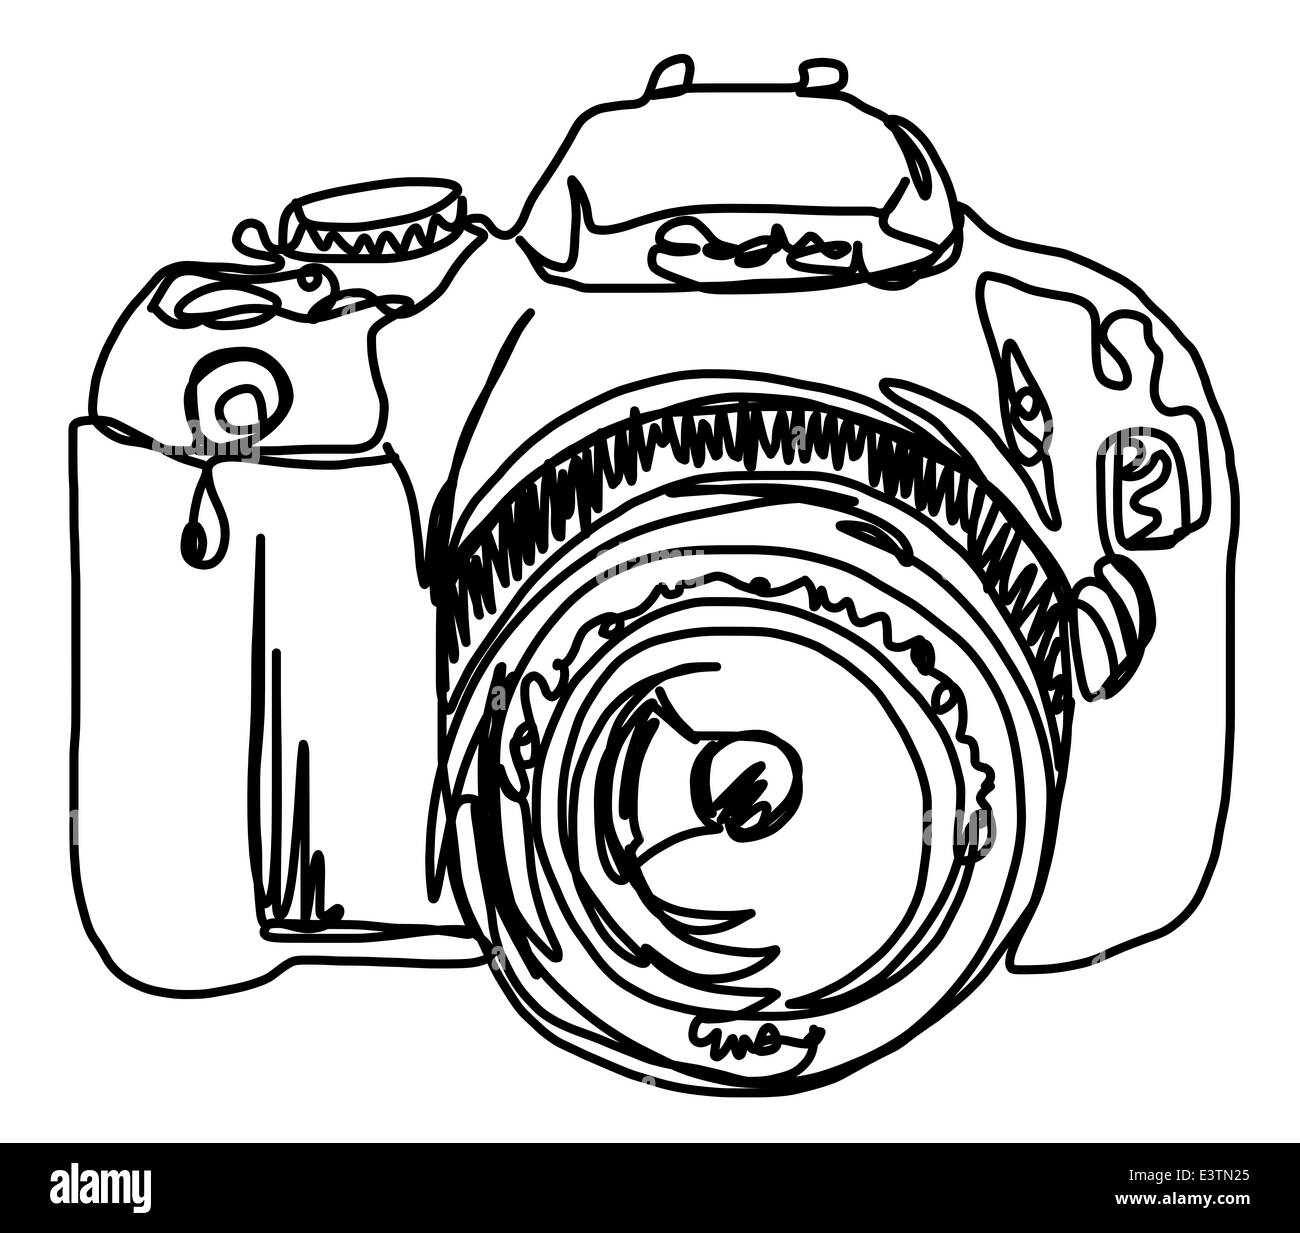 Dibujo de línea continua de una cámara Foto de stock